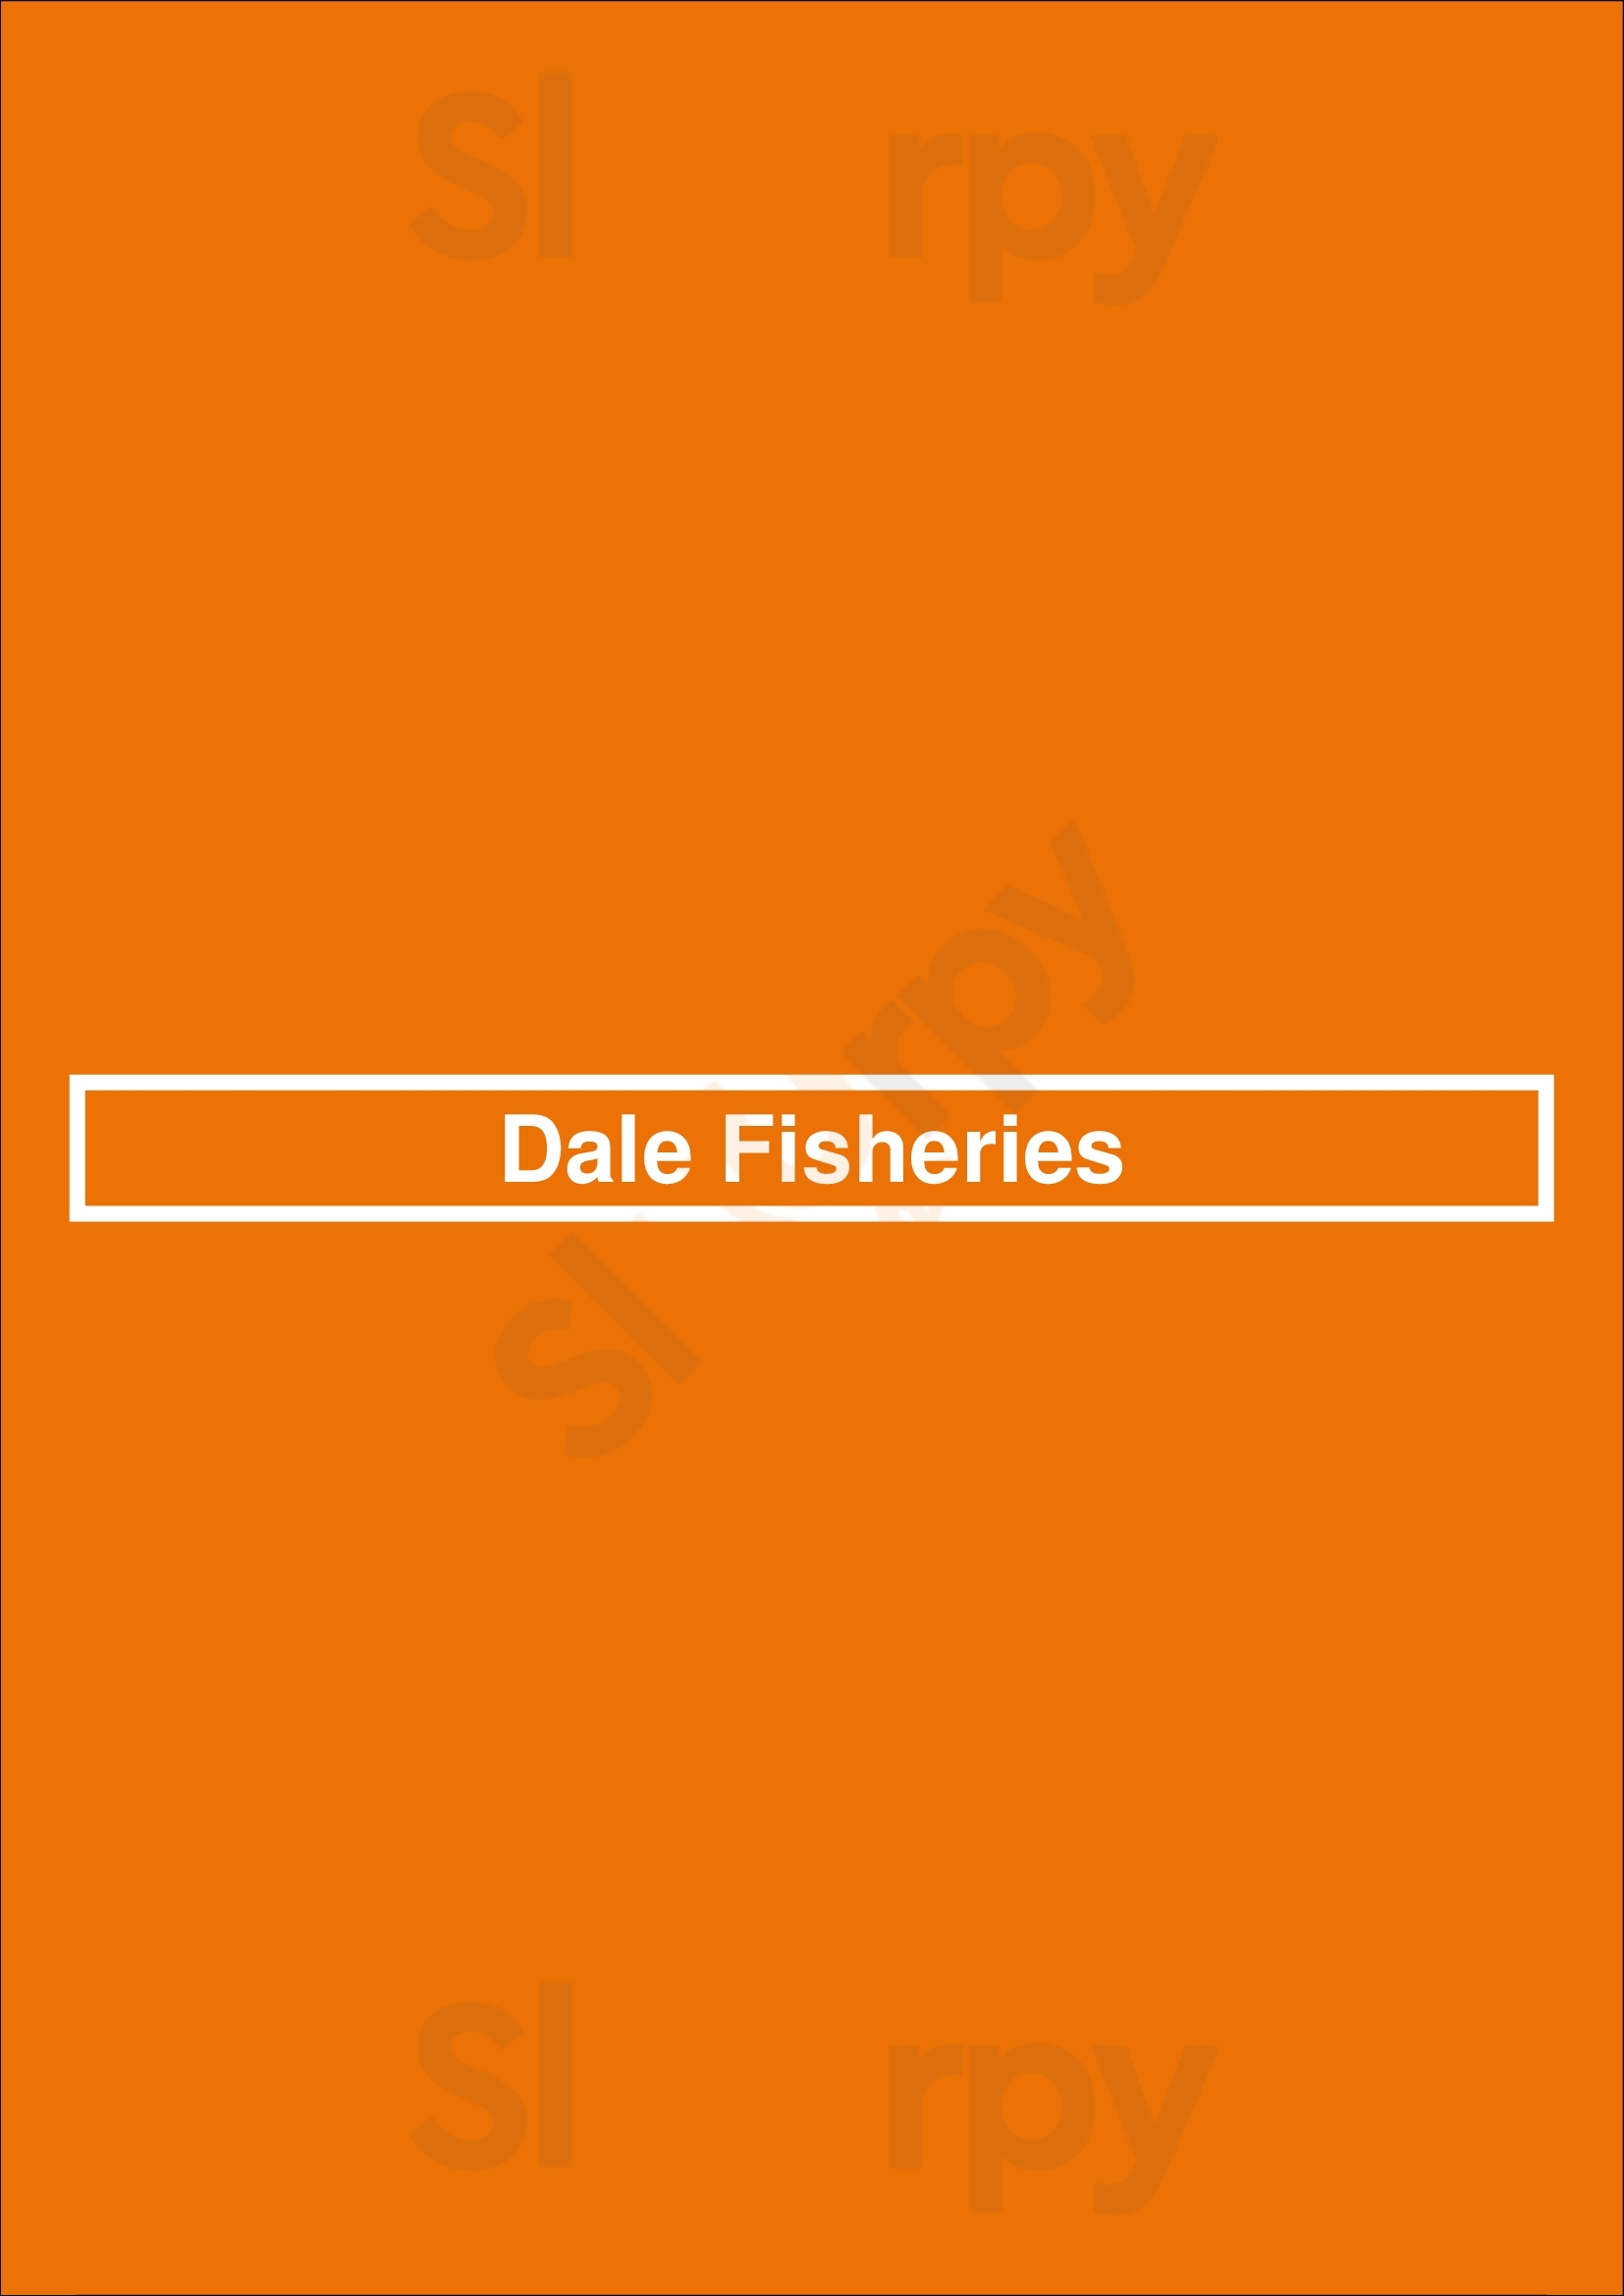 Dale Fisheries Barnsley Menu - 1